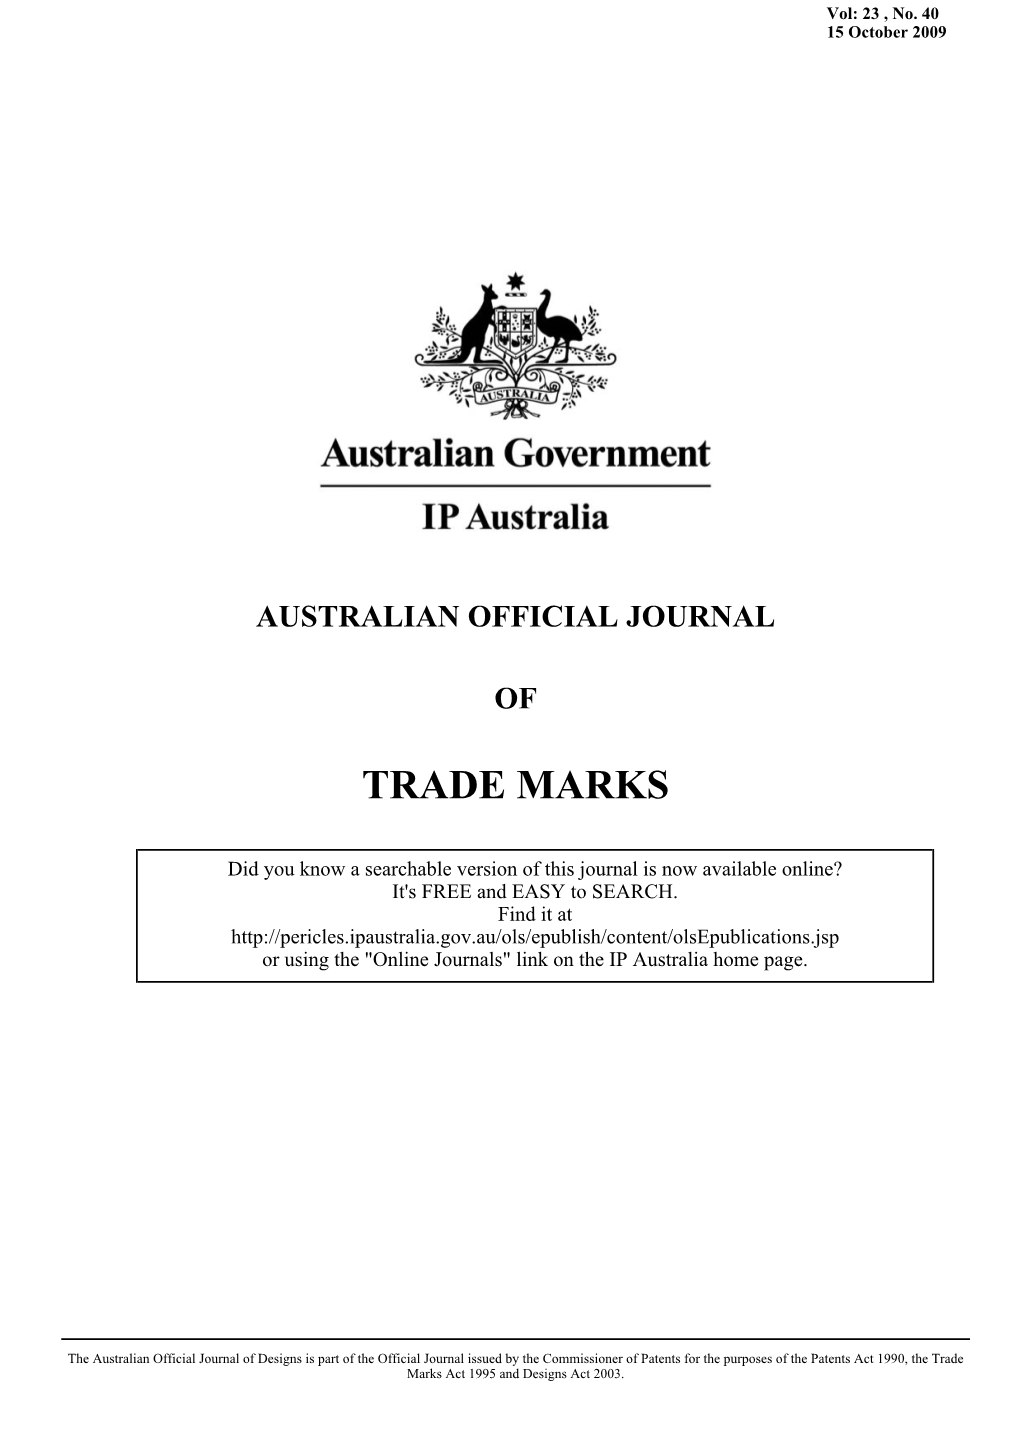 AUSTRALIAN OFFICIAL JOURNAL of TRADE MARKS 15 October 2009